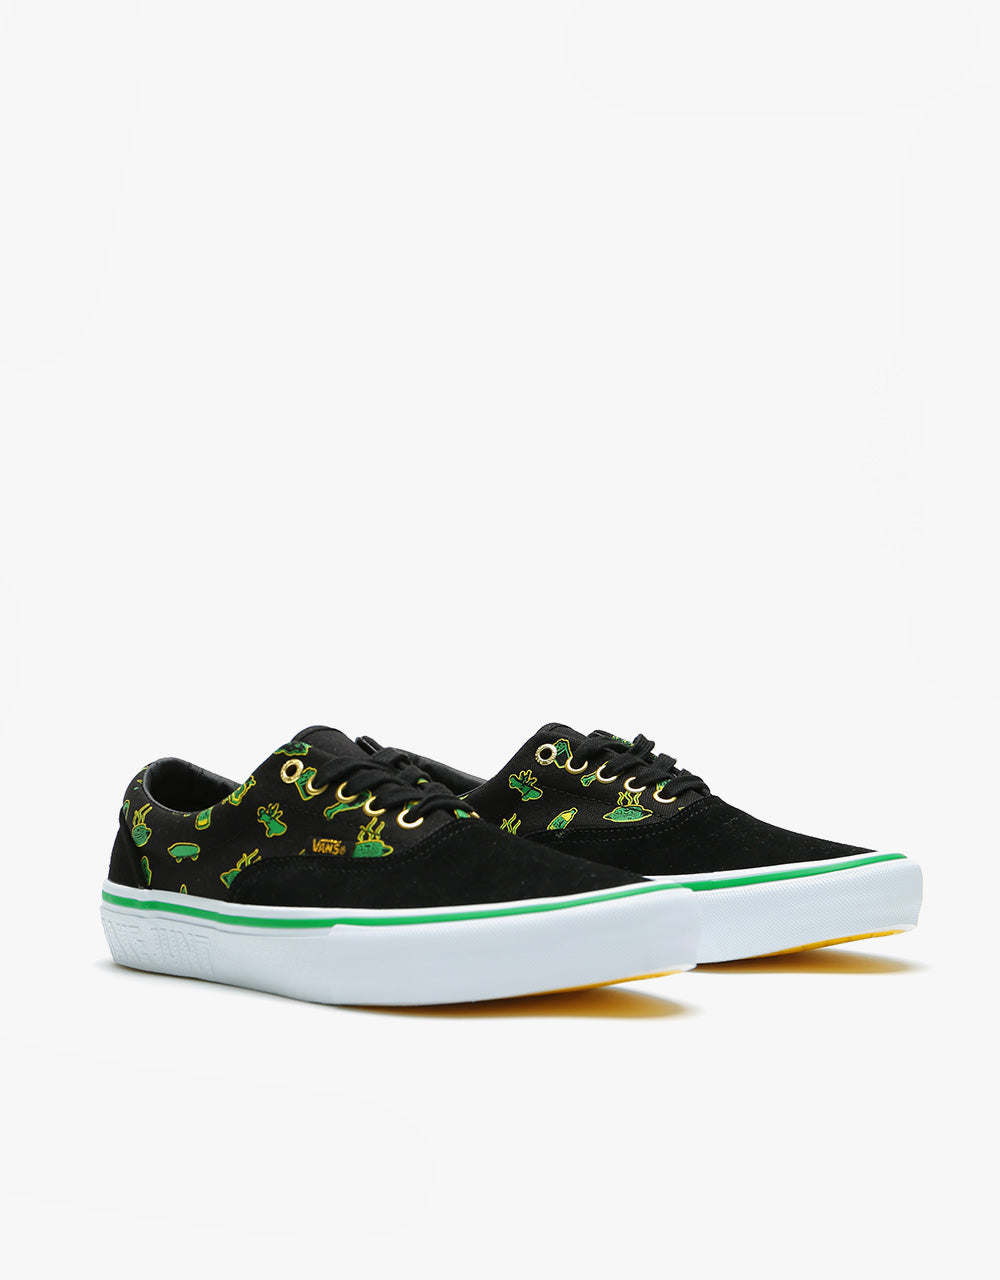 Vans Era Pro Skate Shoes - (Shake Junt) Black/White